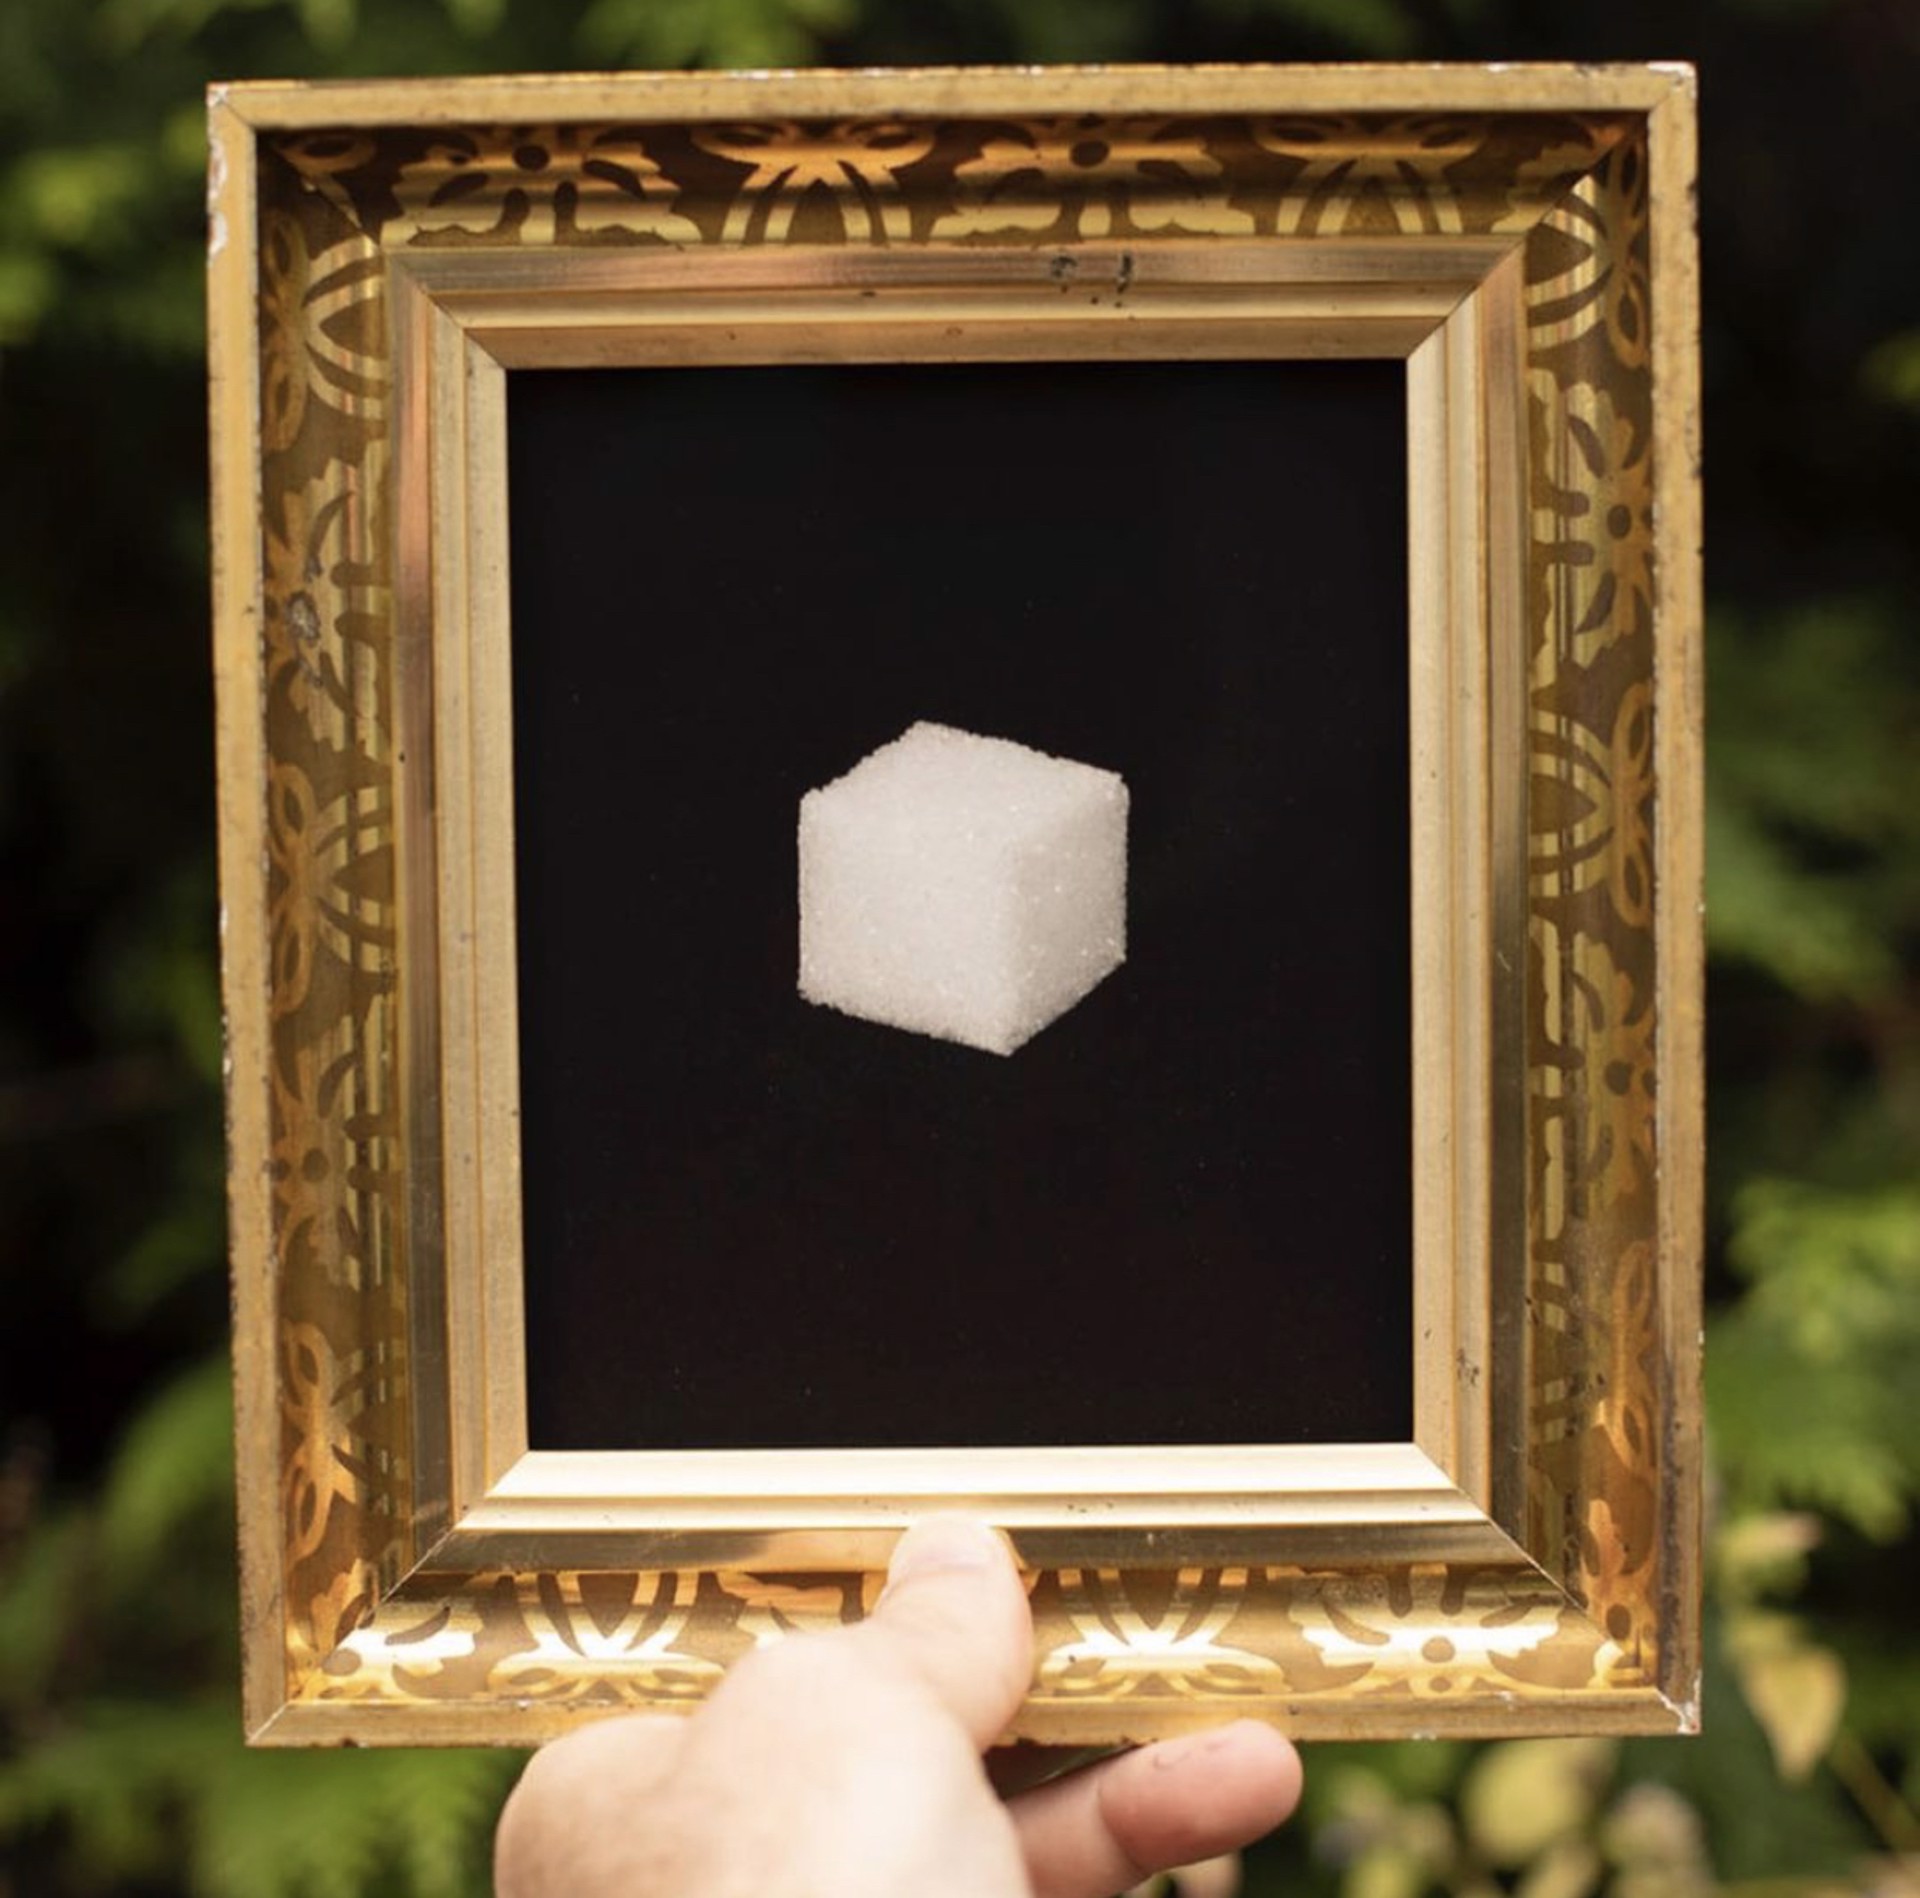 Sugar Cube by Jefferson Hayman